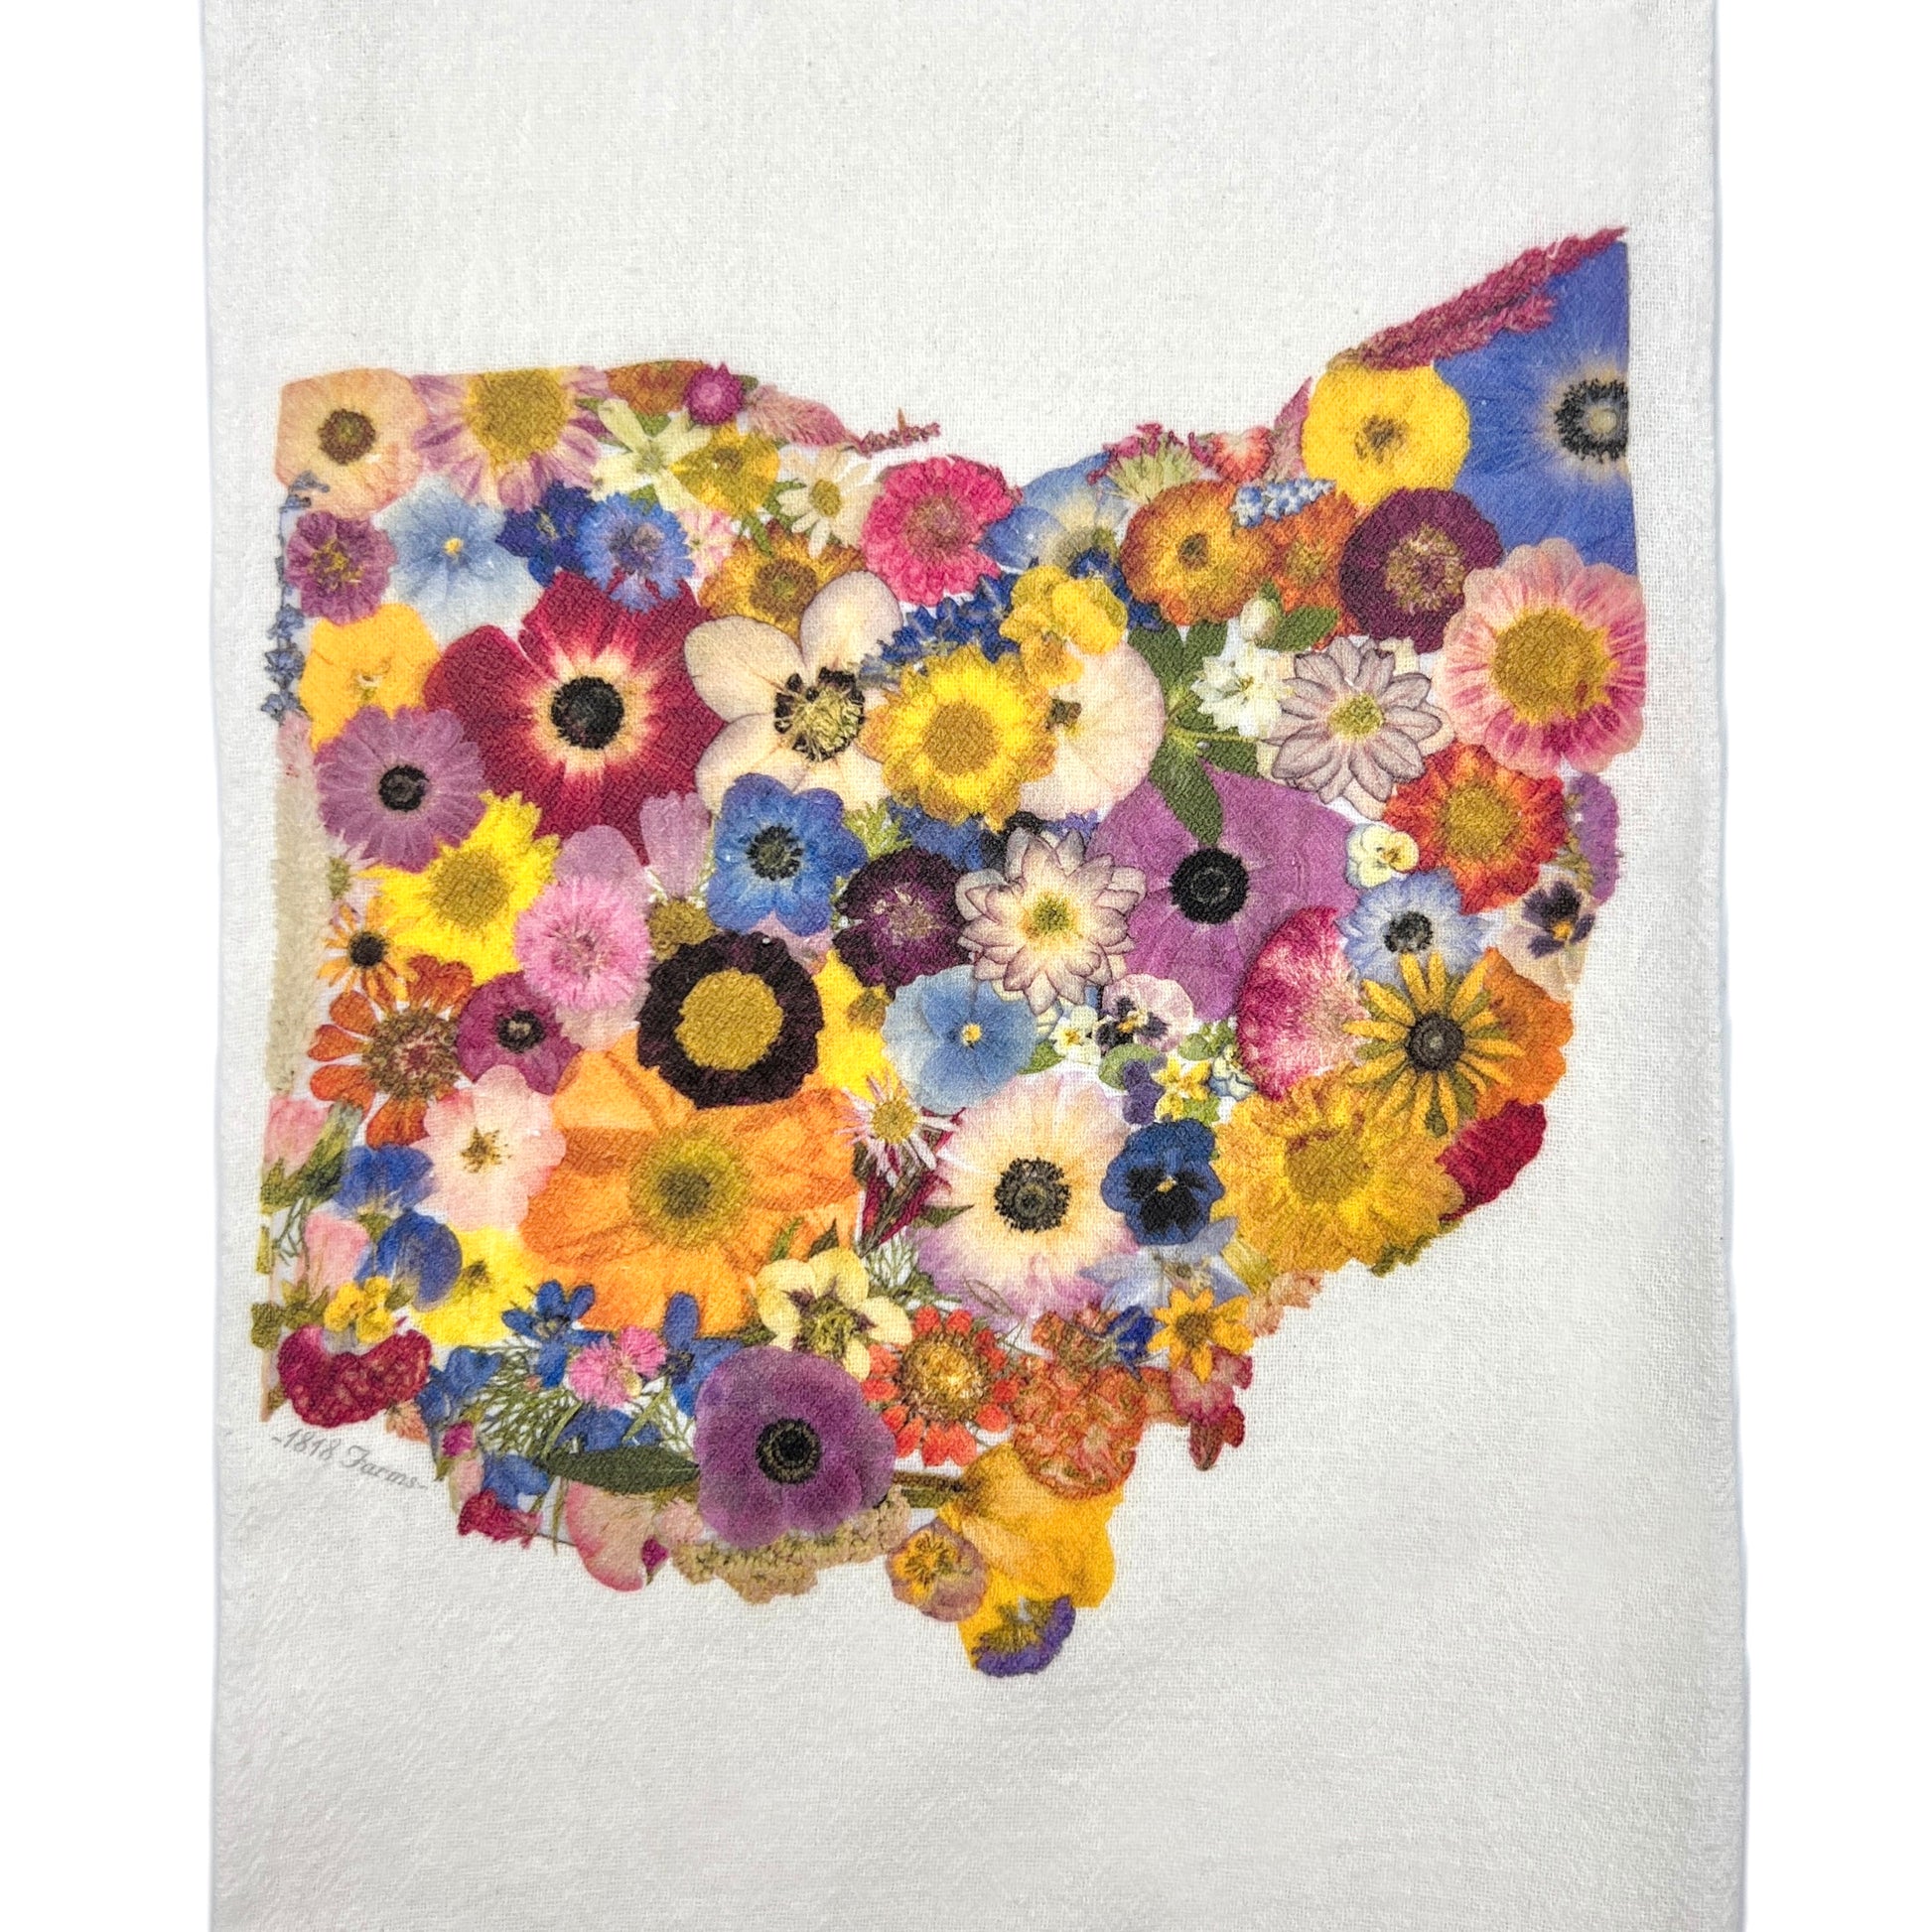 Ohio Themed Flour Sack Towel  - "Where I Bloom" Collection Towel 1818 Farms   